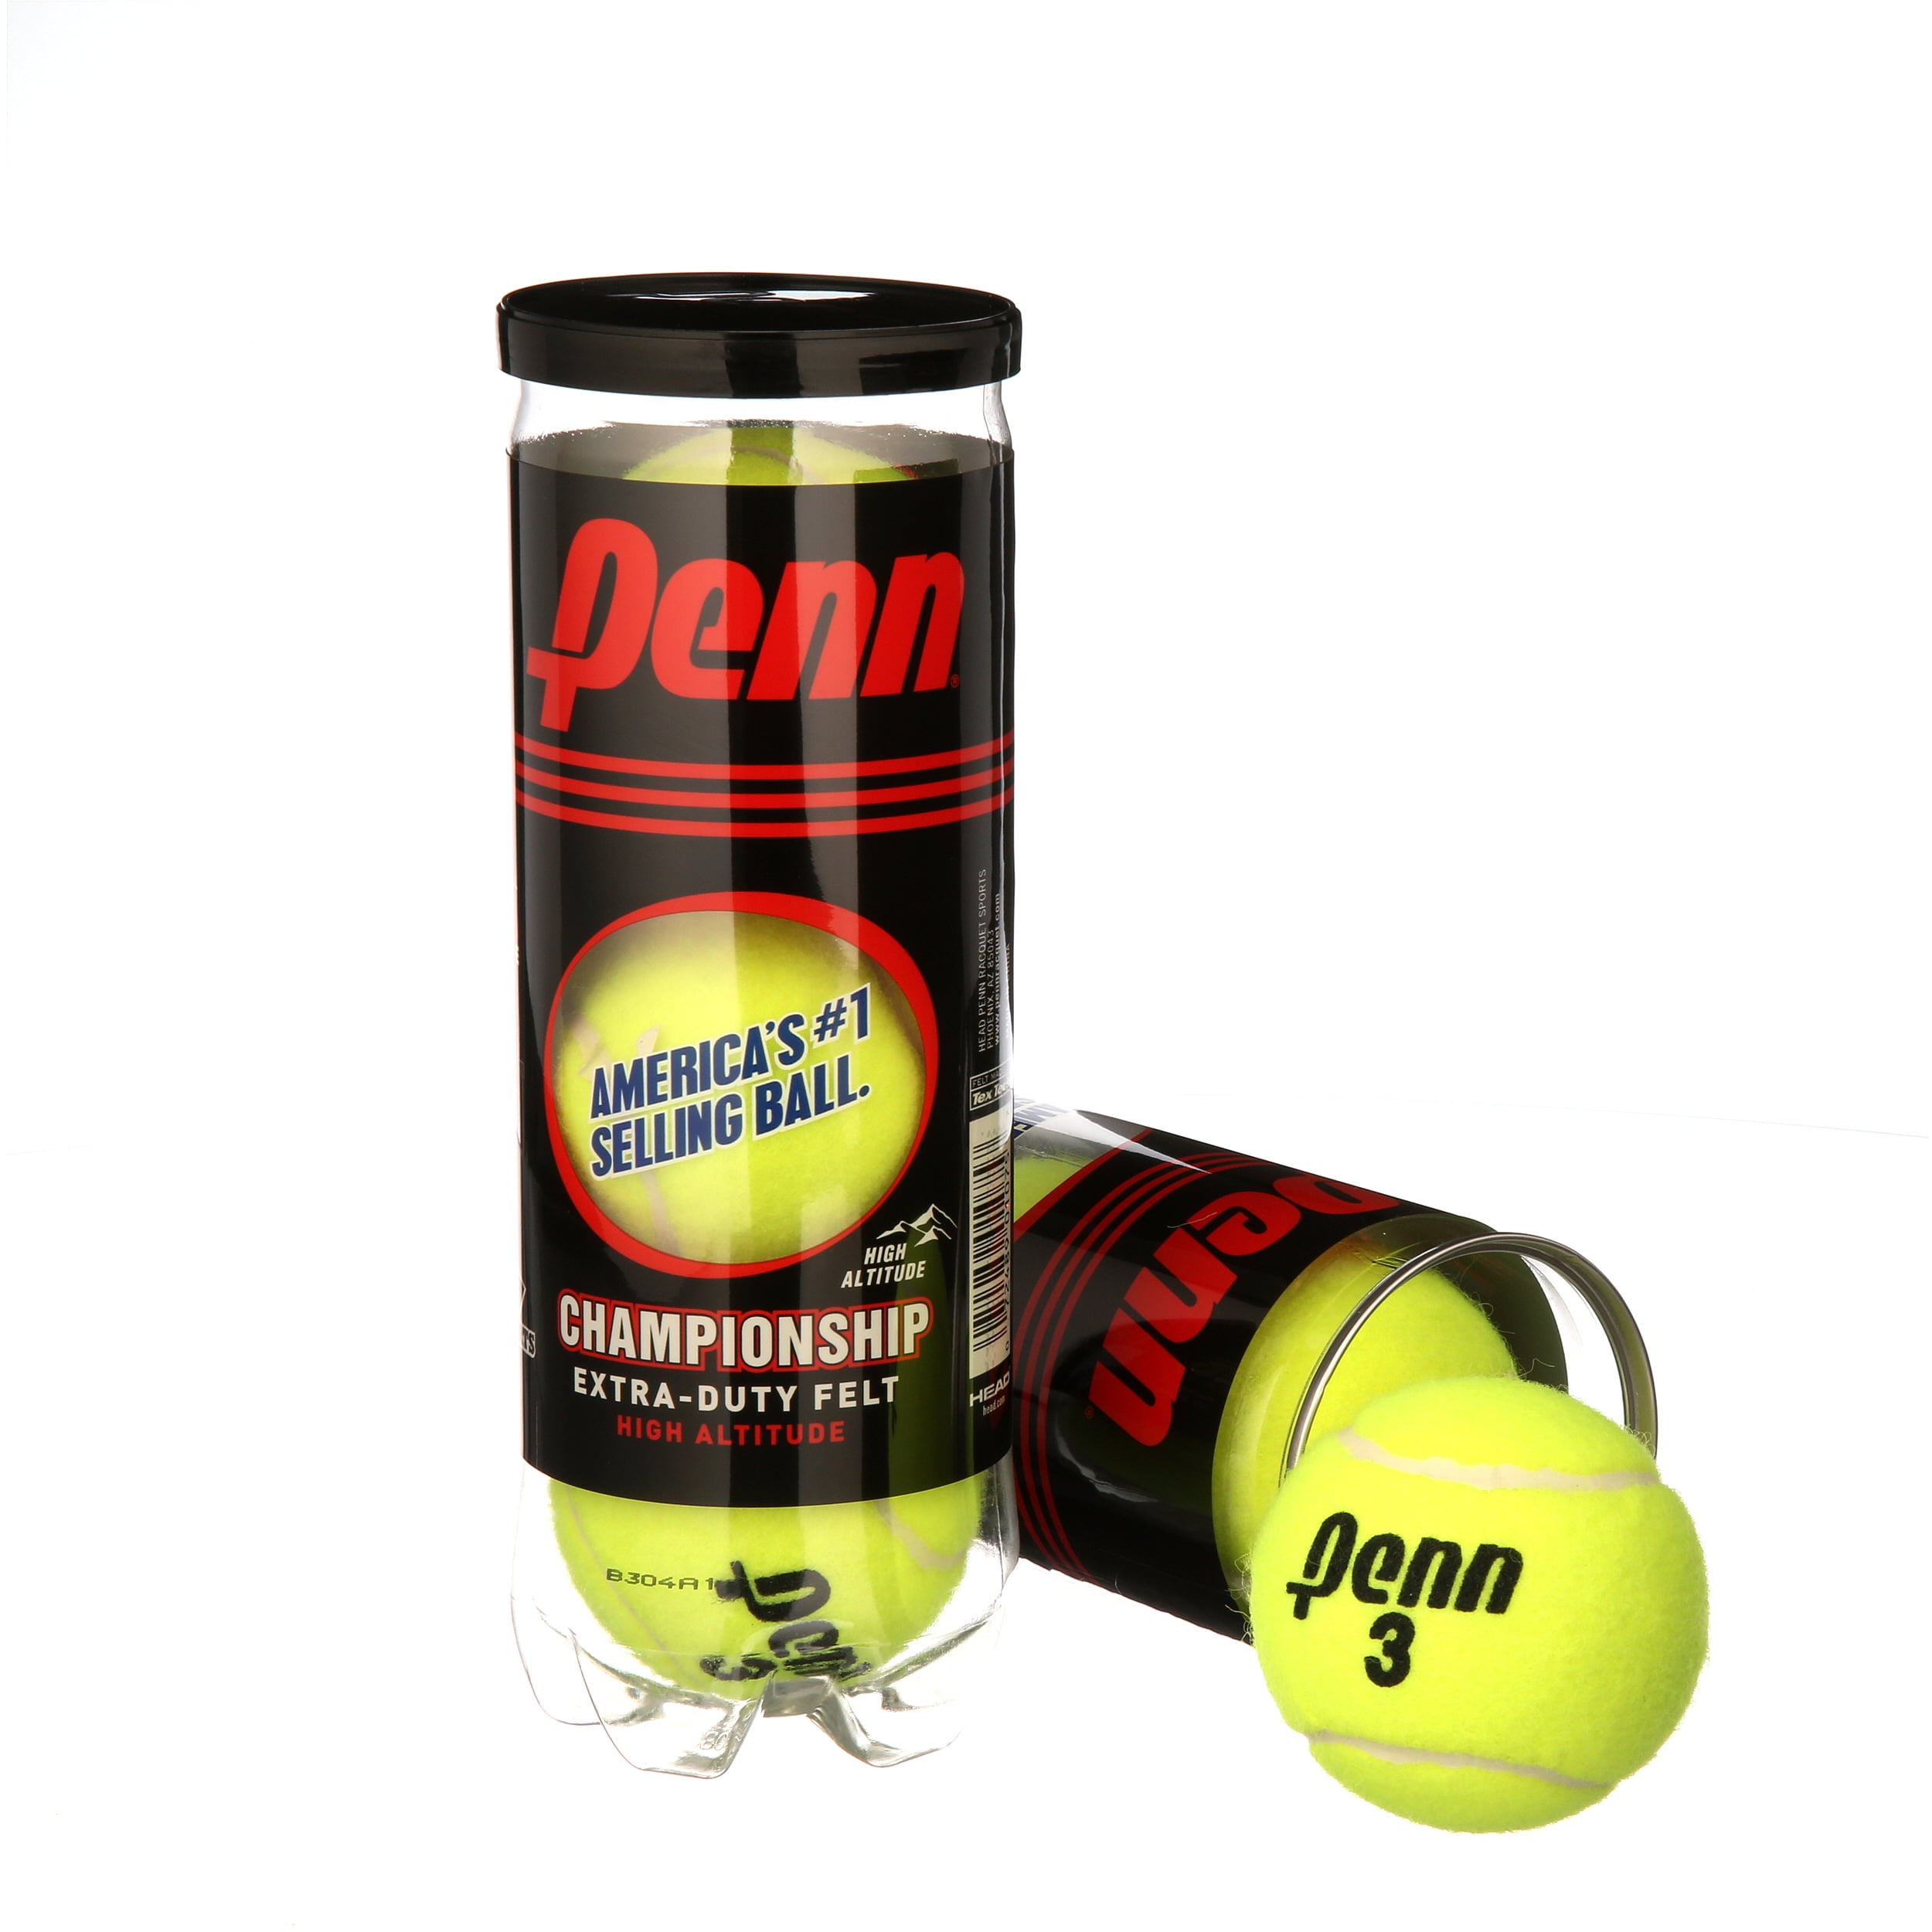 Single Or Bulk Penn Championship Extra Duty Felt Tennis Ball Brand New Unopened